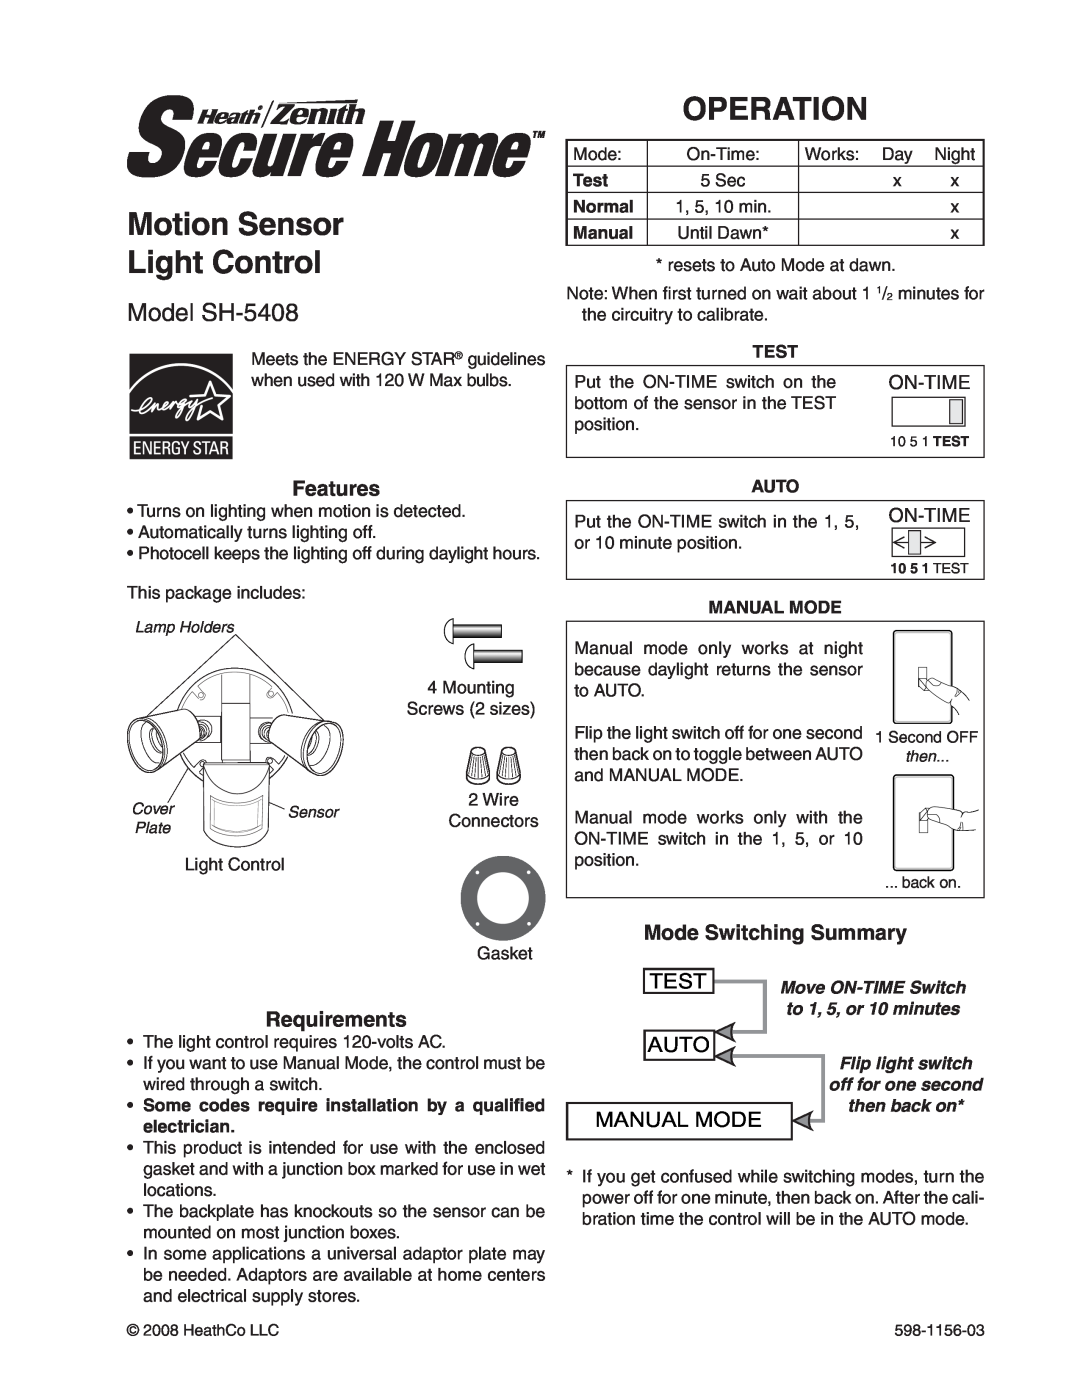 Heath Zenith manual Motion Sensor Light Control, Operation, Model SH-5408, Auto, Manual Mode, On-Time, Test, Normal 